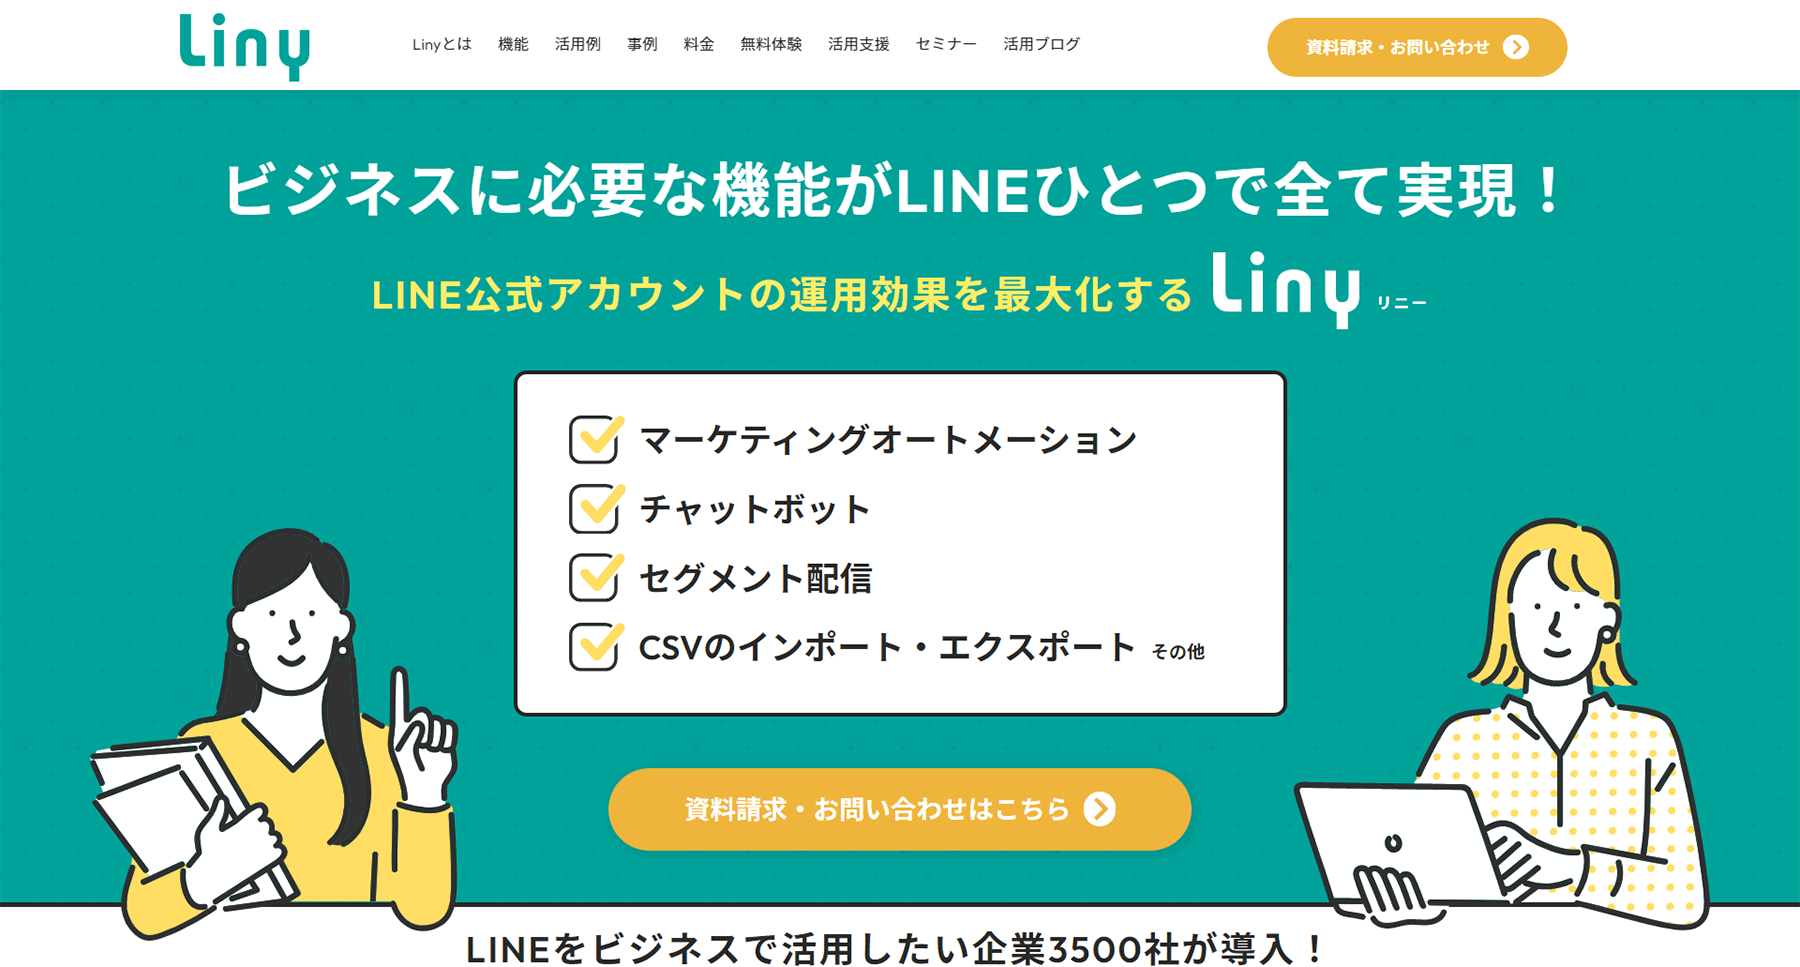 Liny公式Webサイト